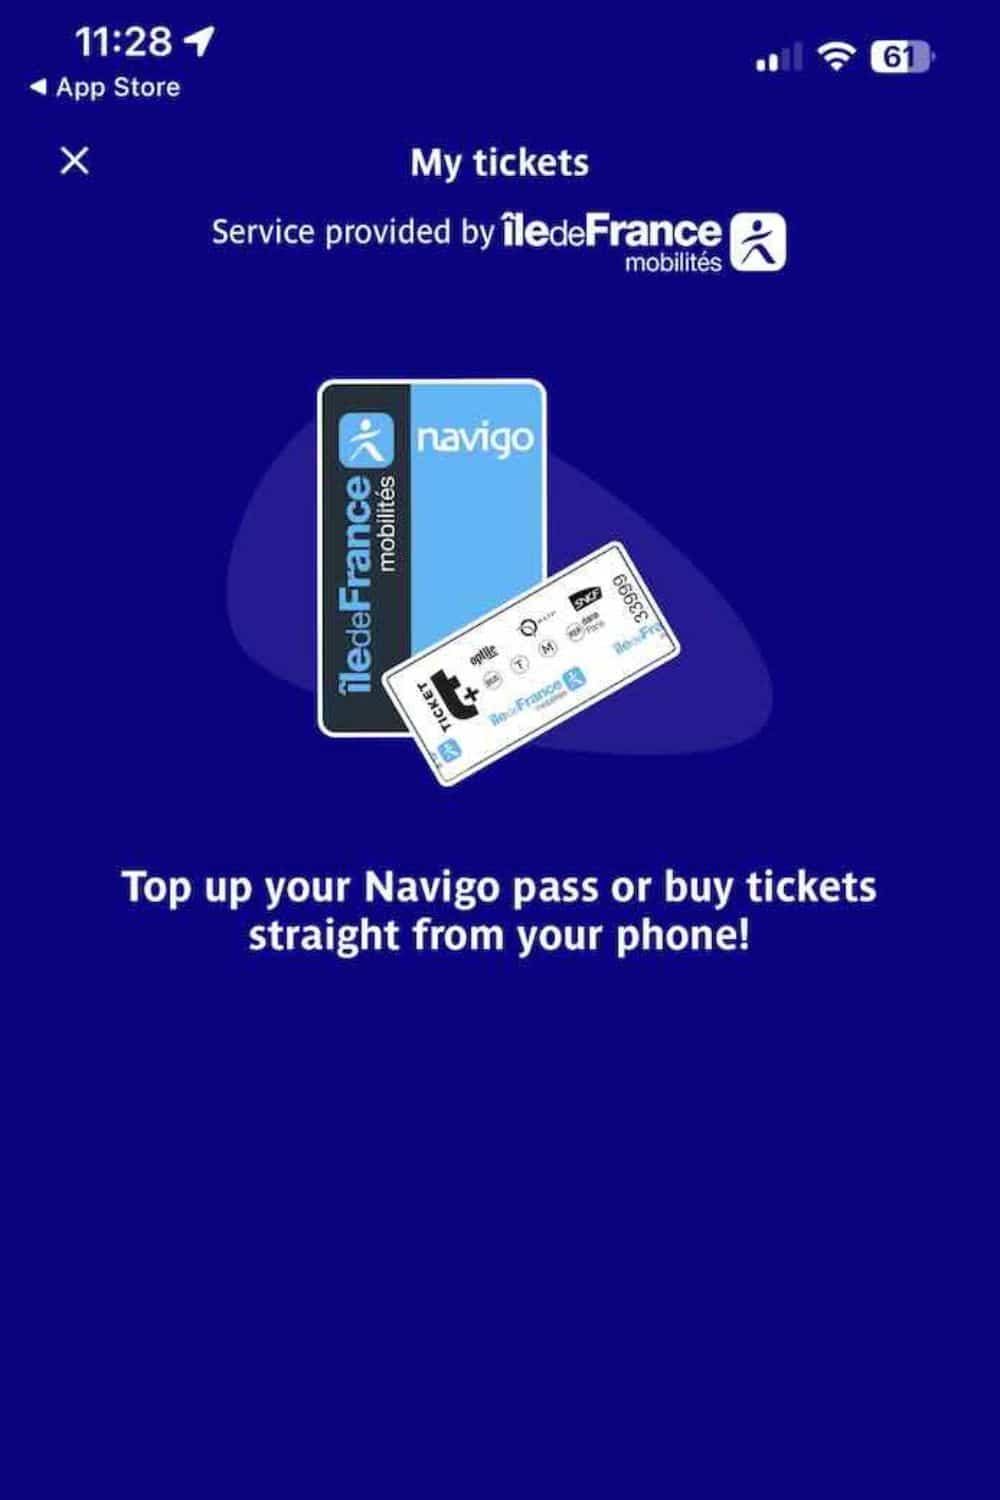 A screenshot of the Navigo app on a smartphone, displaying options to top up a Navigo pass or buy tickets for Paris metro services, promoting easy travel around Paris.